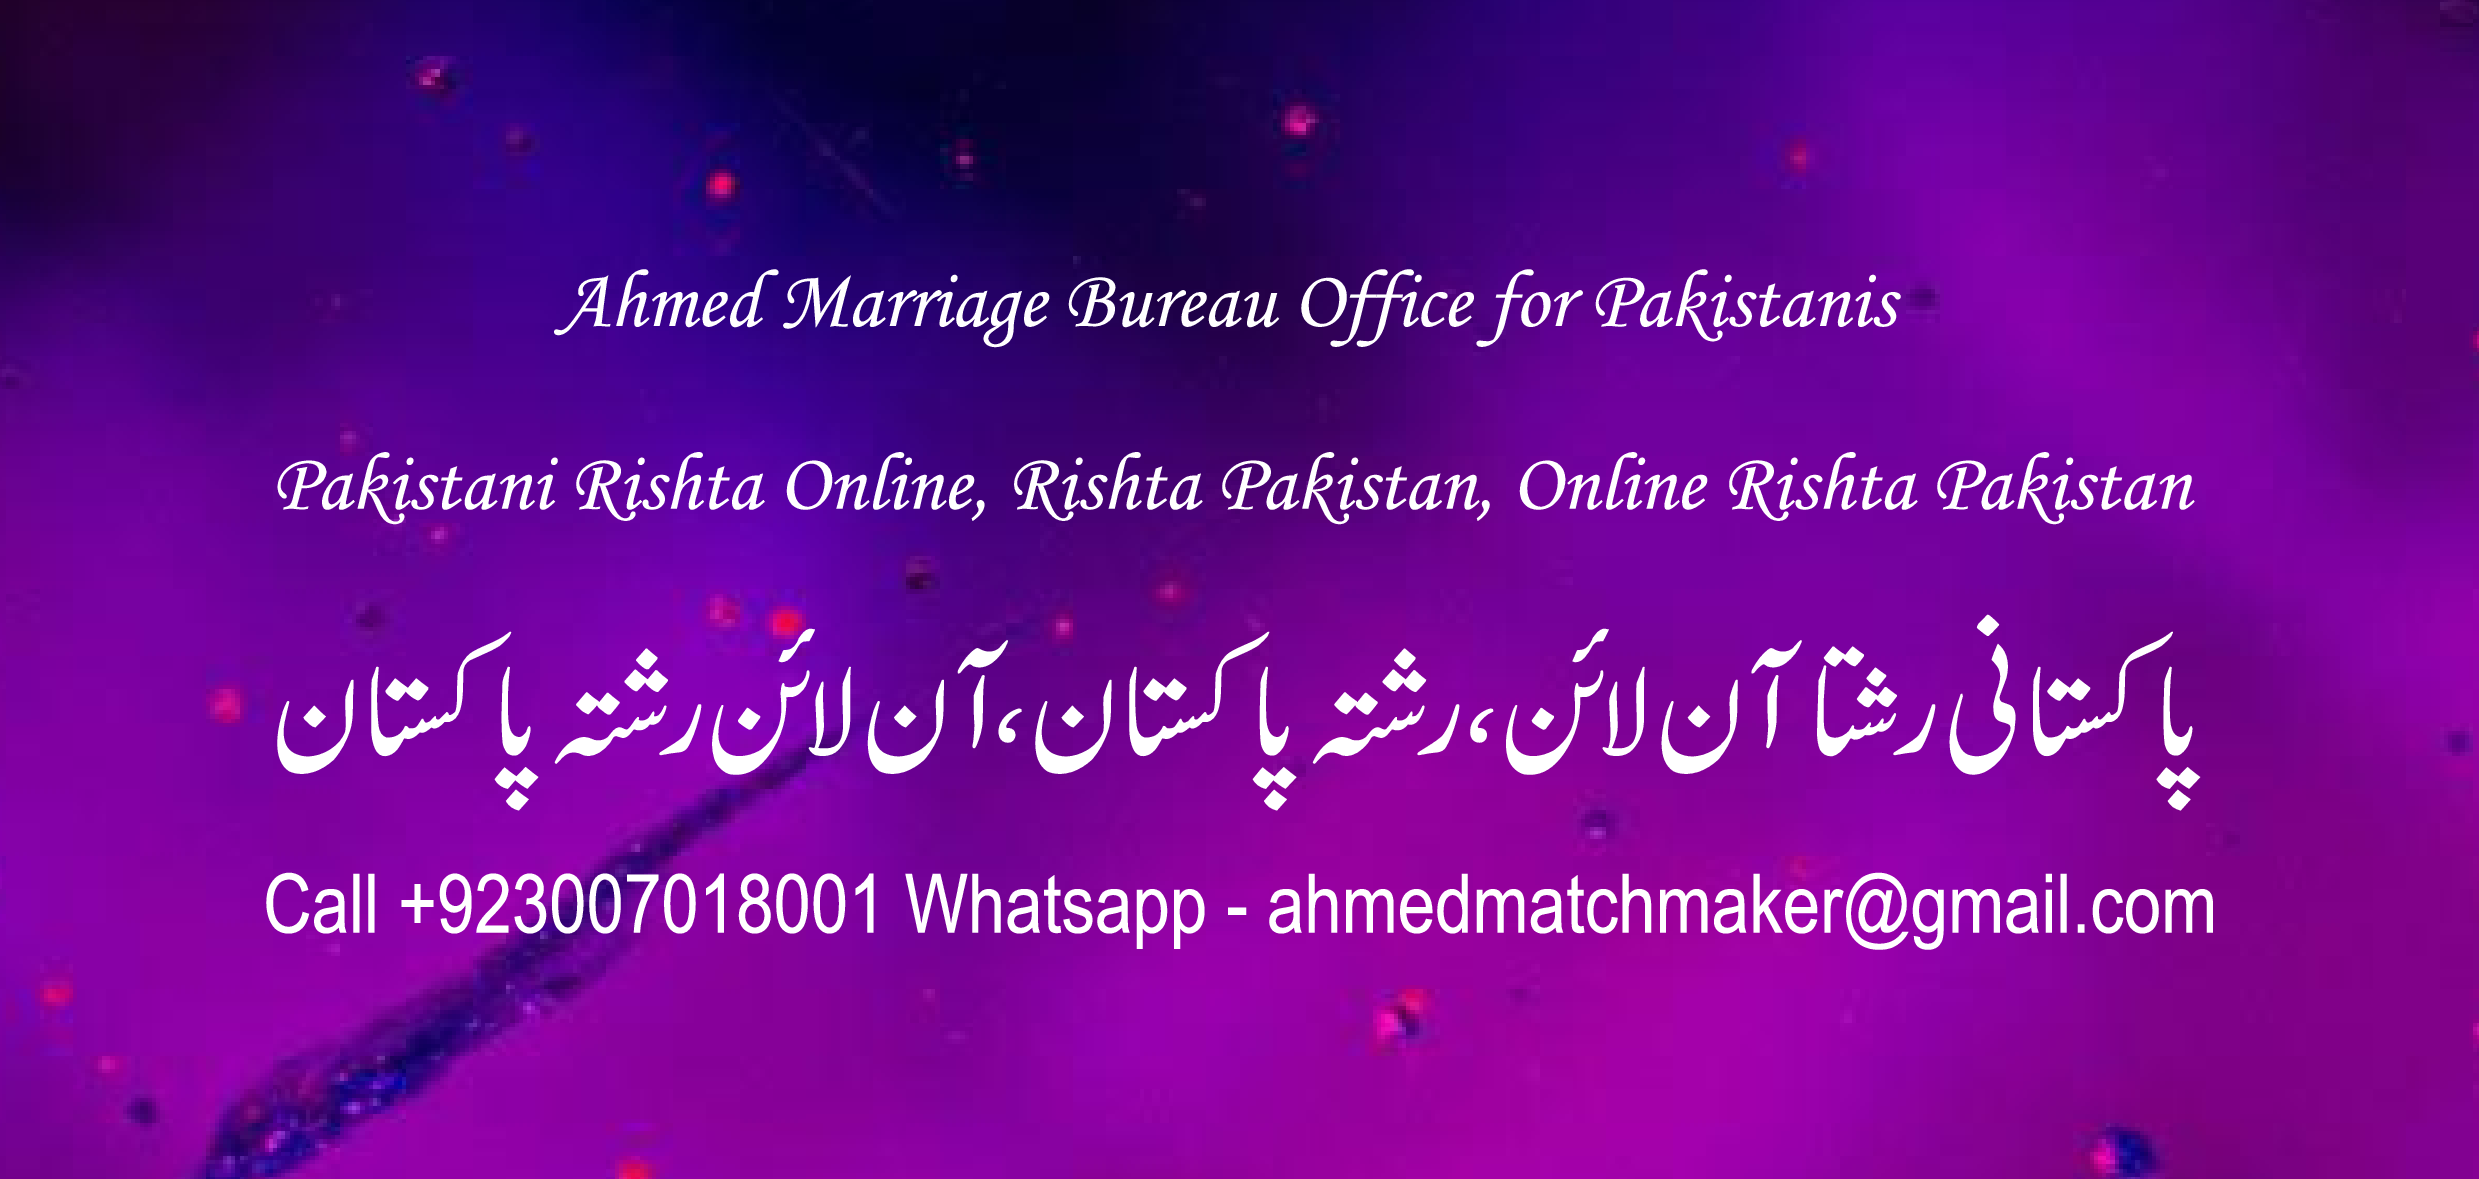 Pakistan-marriage-bureau-shaadi-matrimonial-America-Canada-Australia-Dubai-Europe-33.png